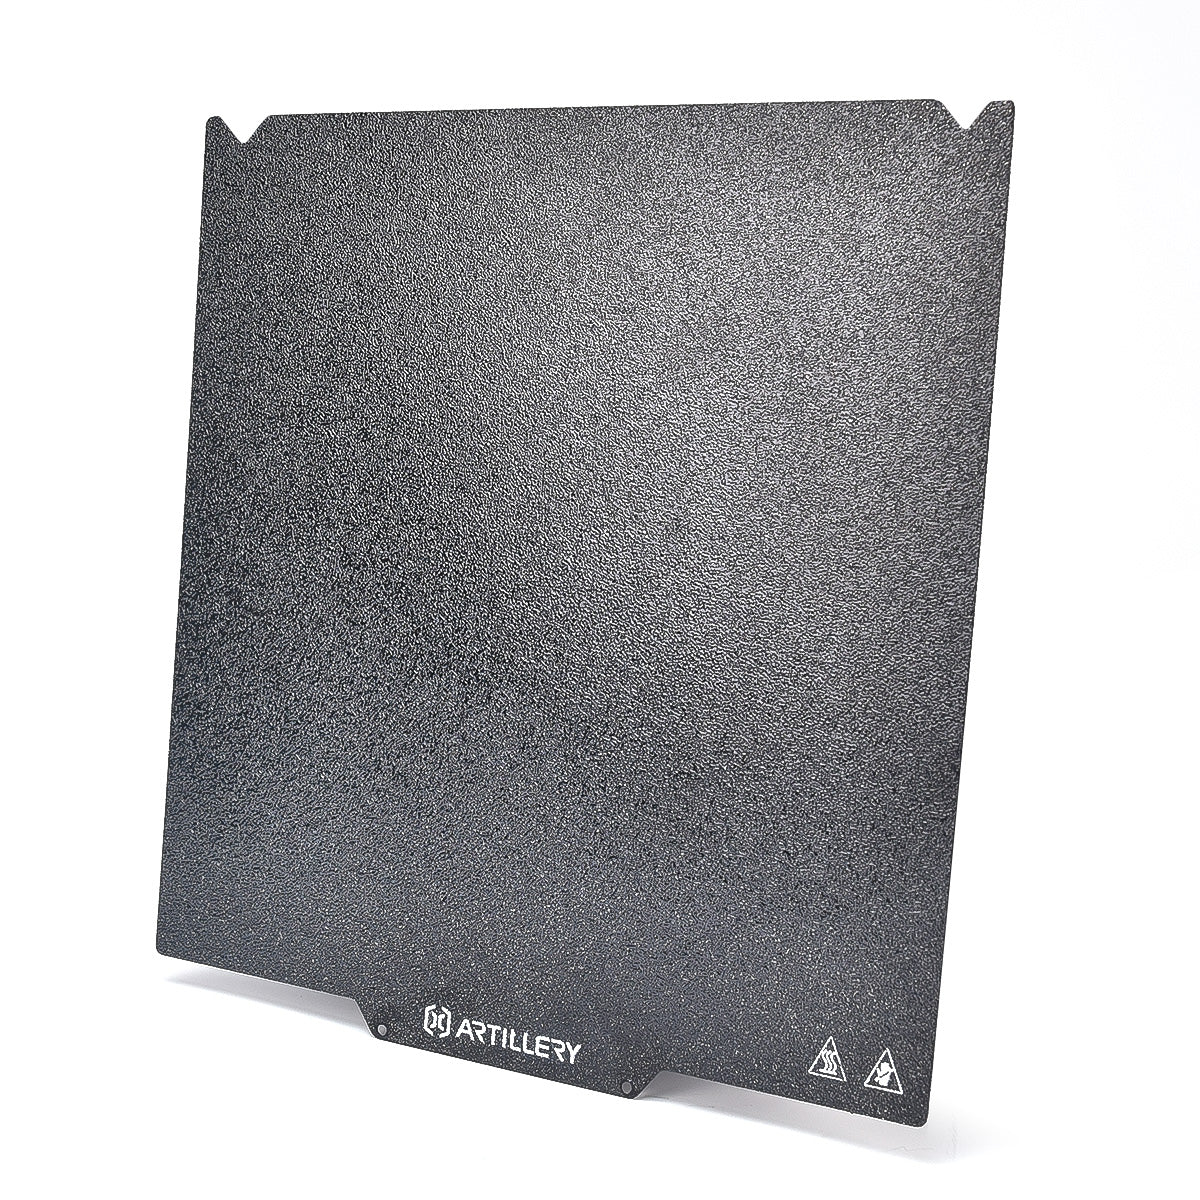 Placa PEI magnética flexible de doble cara texturizada para SW-X4PLUS y SW-X3PLUS